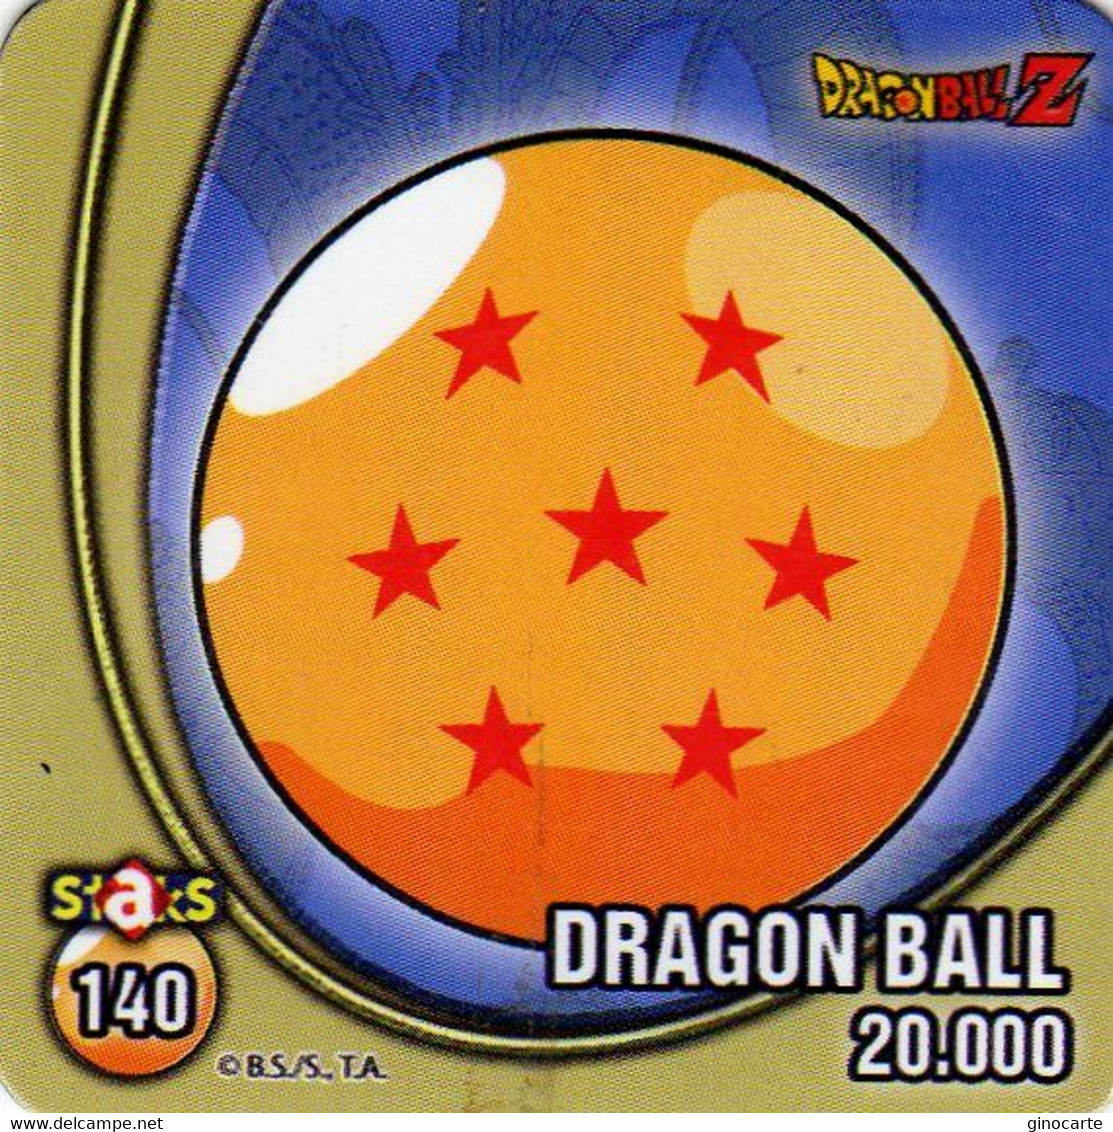 Magnets Magnet Stacks Dragon Ball Dragonball 140 - Personen